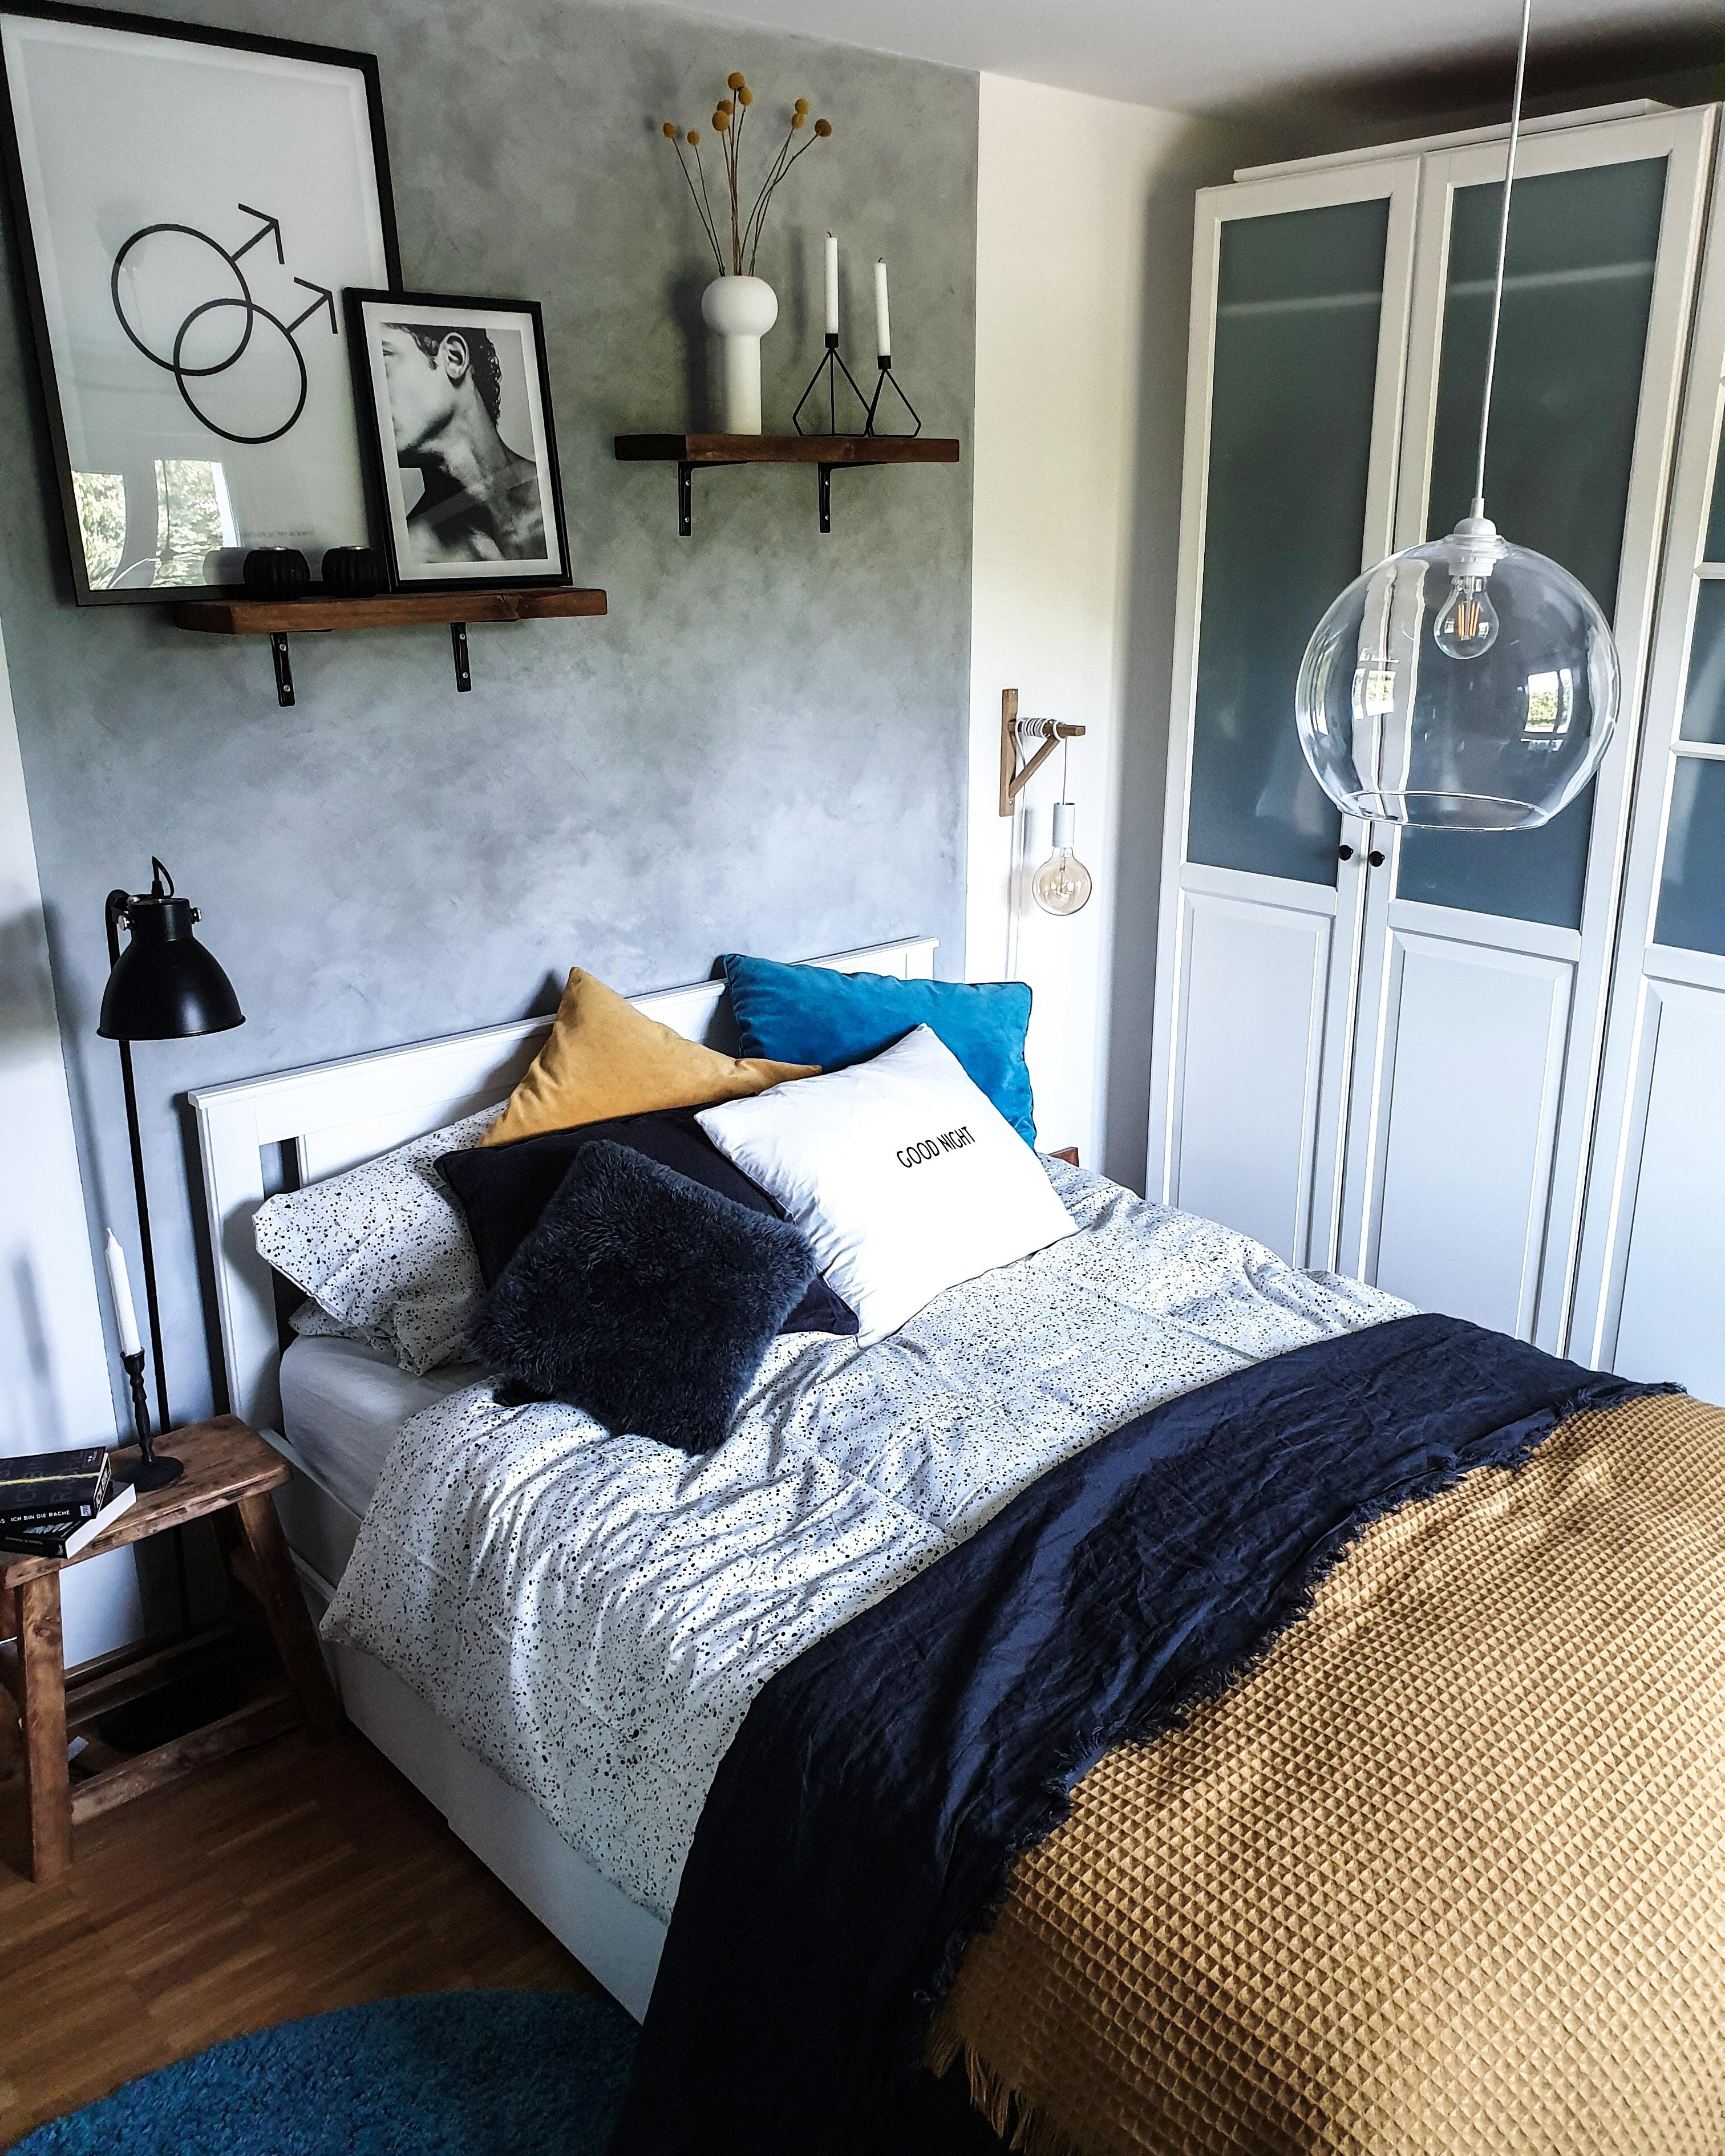 #schlafzimmer #inspo #bedroom #bedroominspo #inspiration #interior

Neue Schlafzimmerinspo